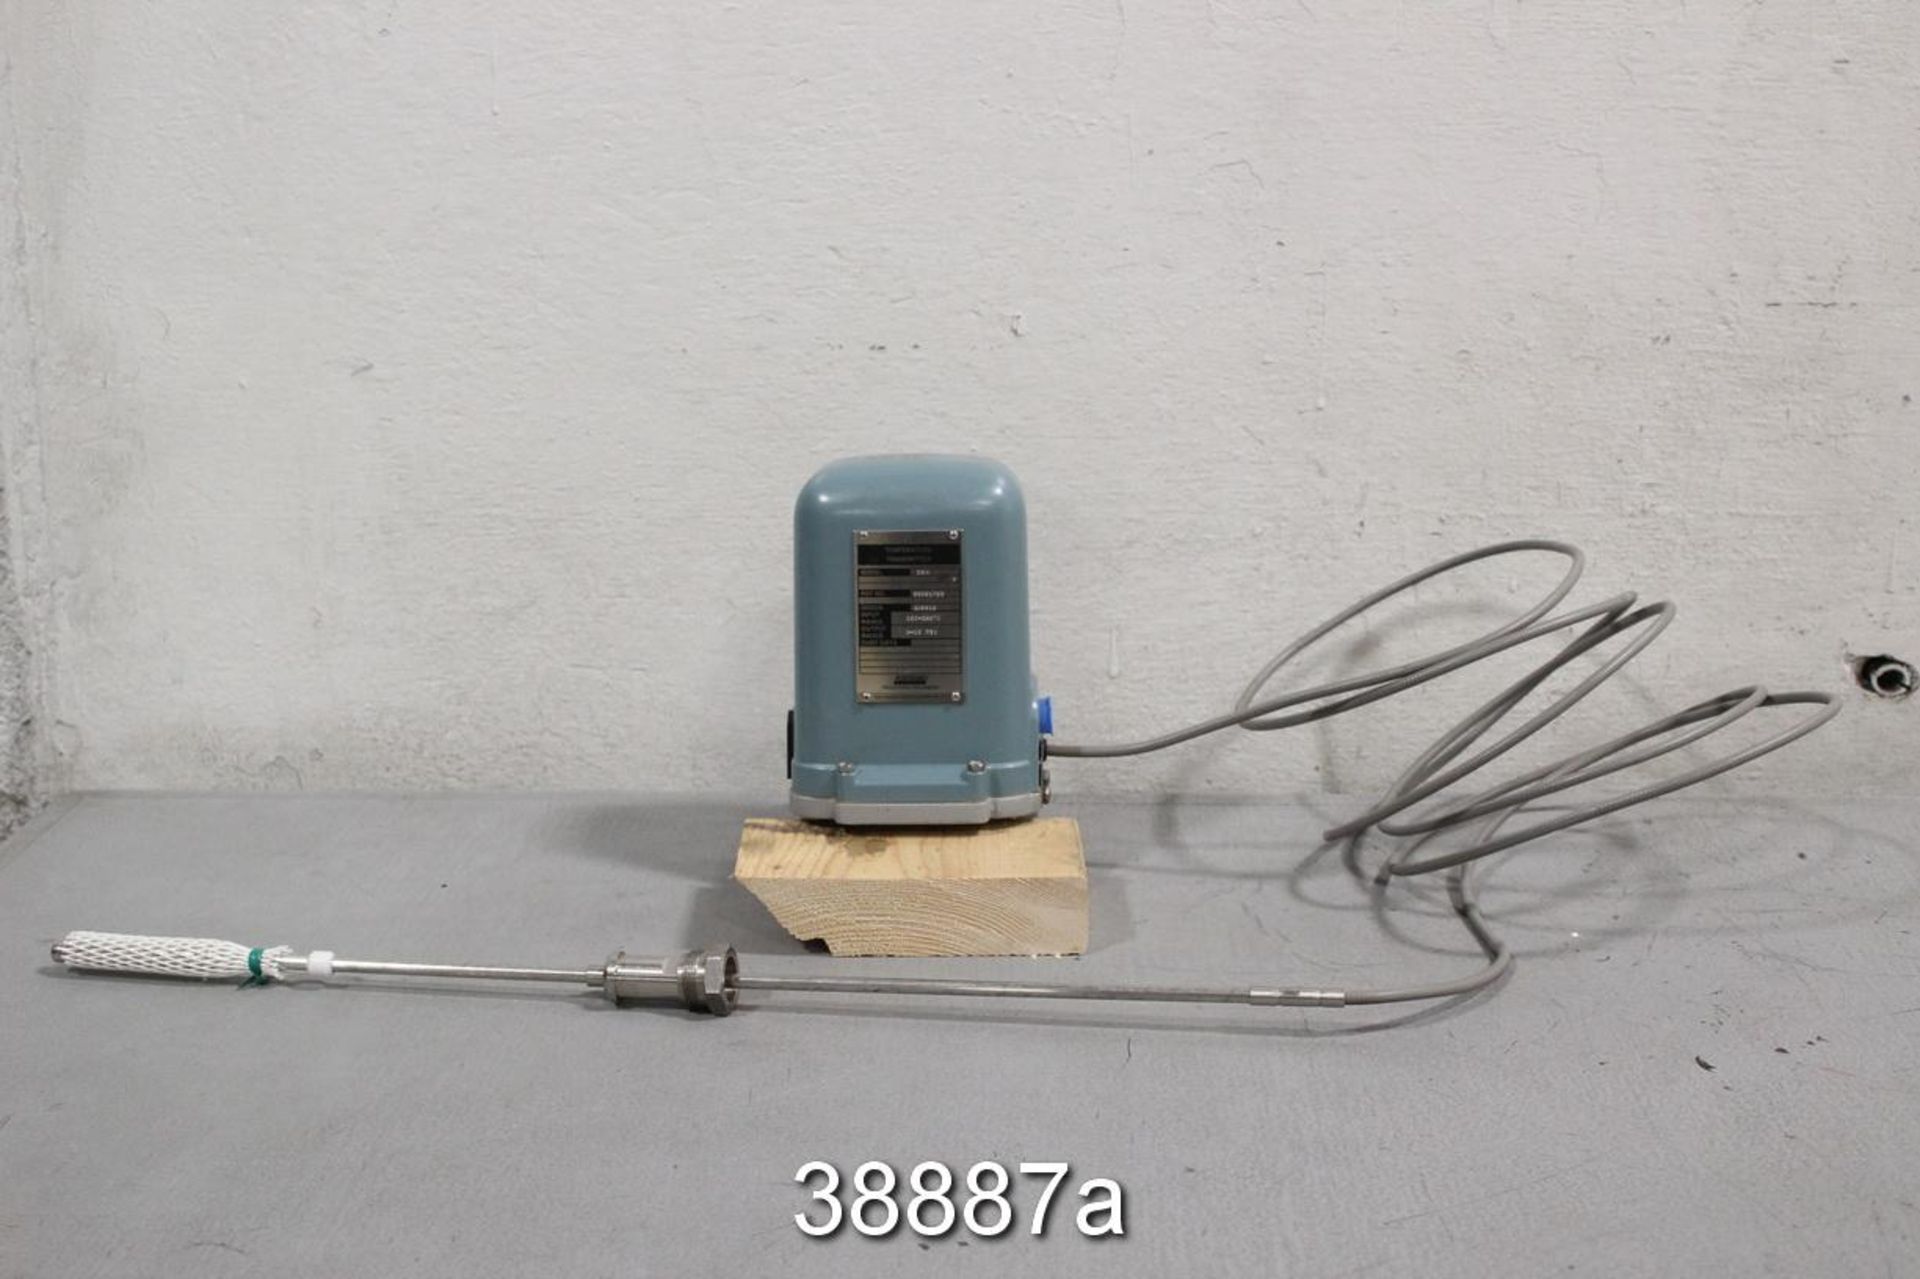 Foxboro 12A Temperature Transmitter, Model 12a, Input Range 150-350 Fahrenheit, Output Range 3-15